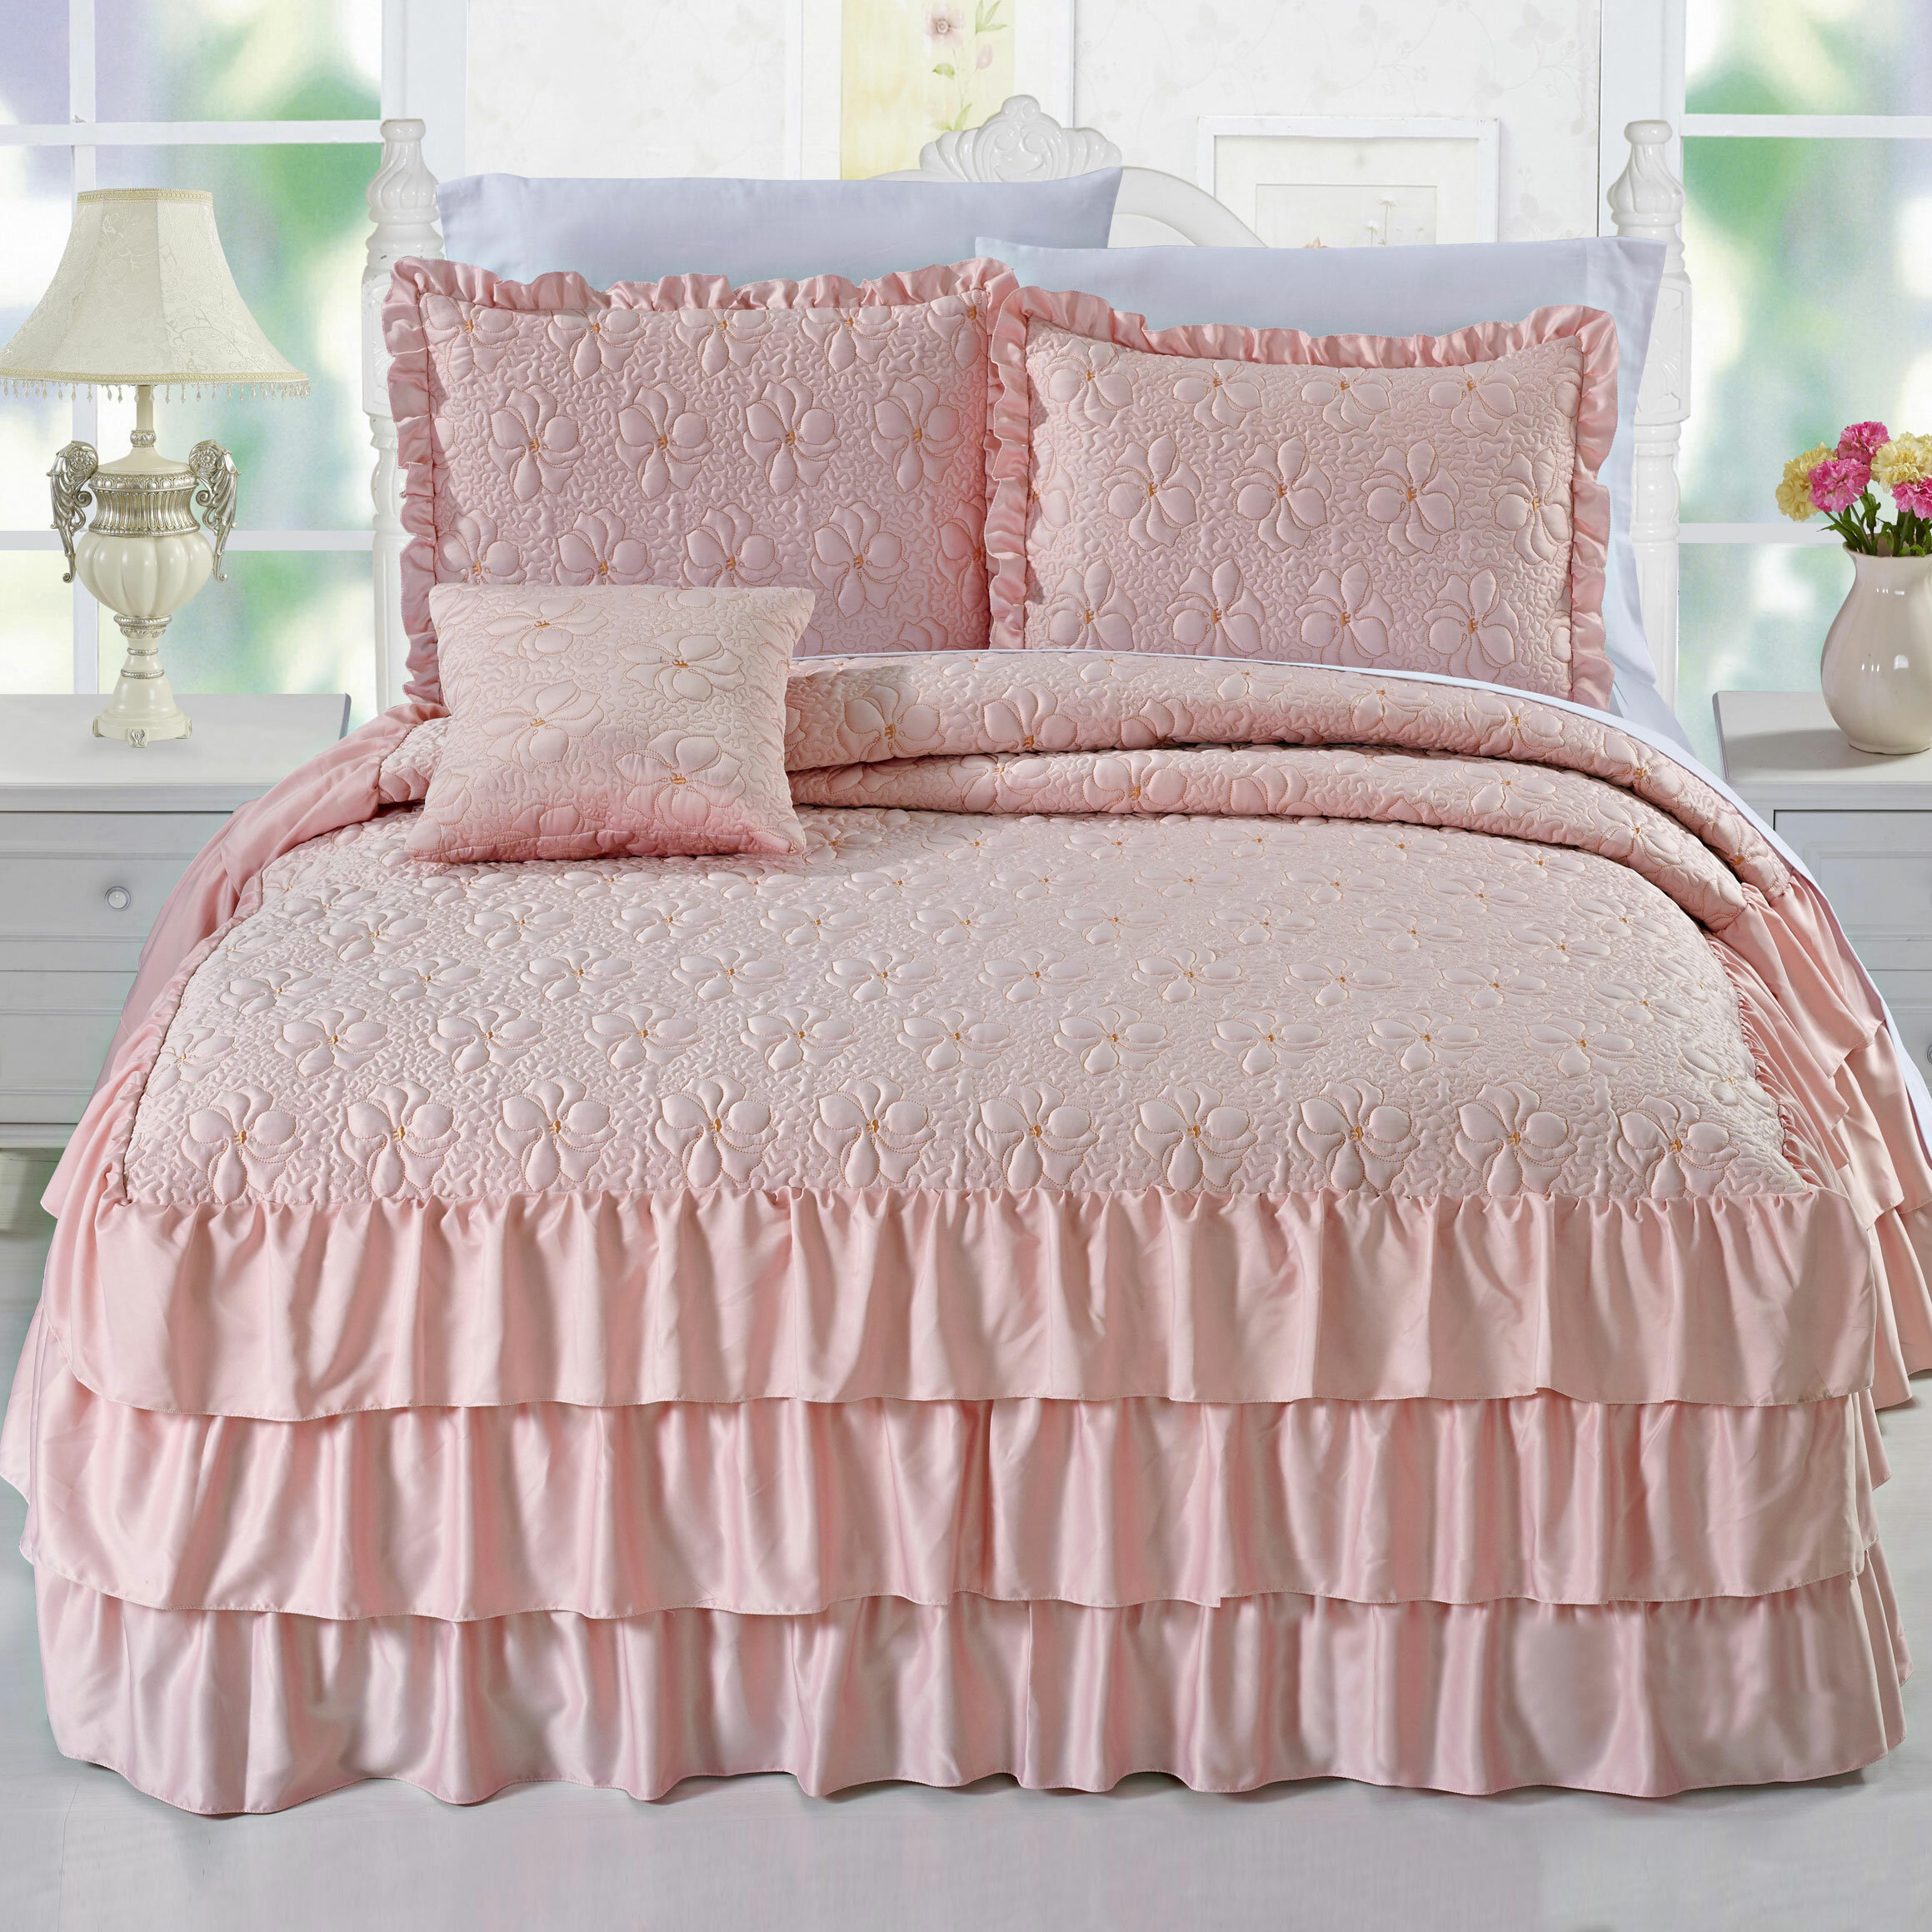 pink ruffle bedding uk